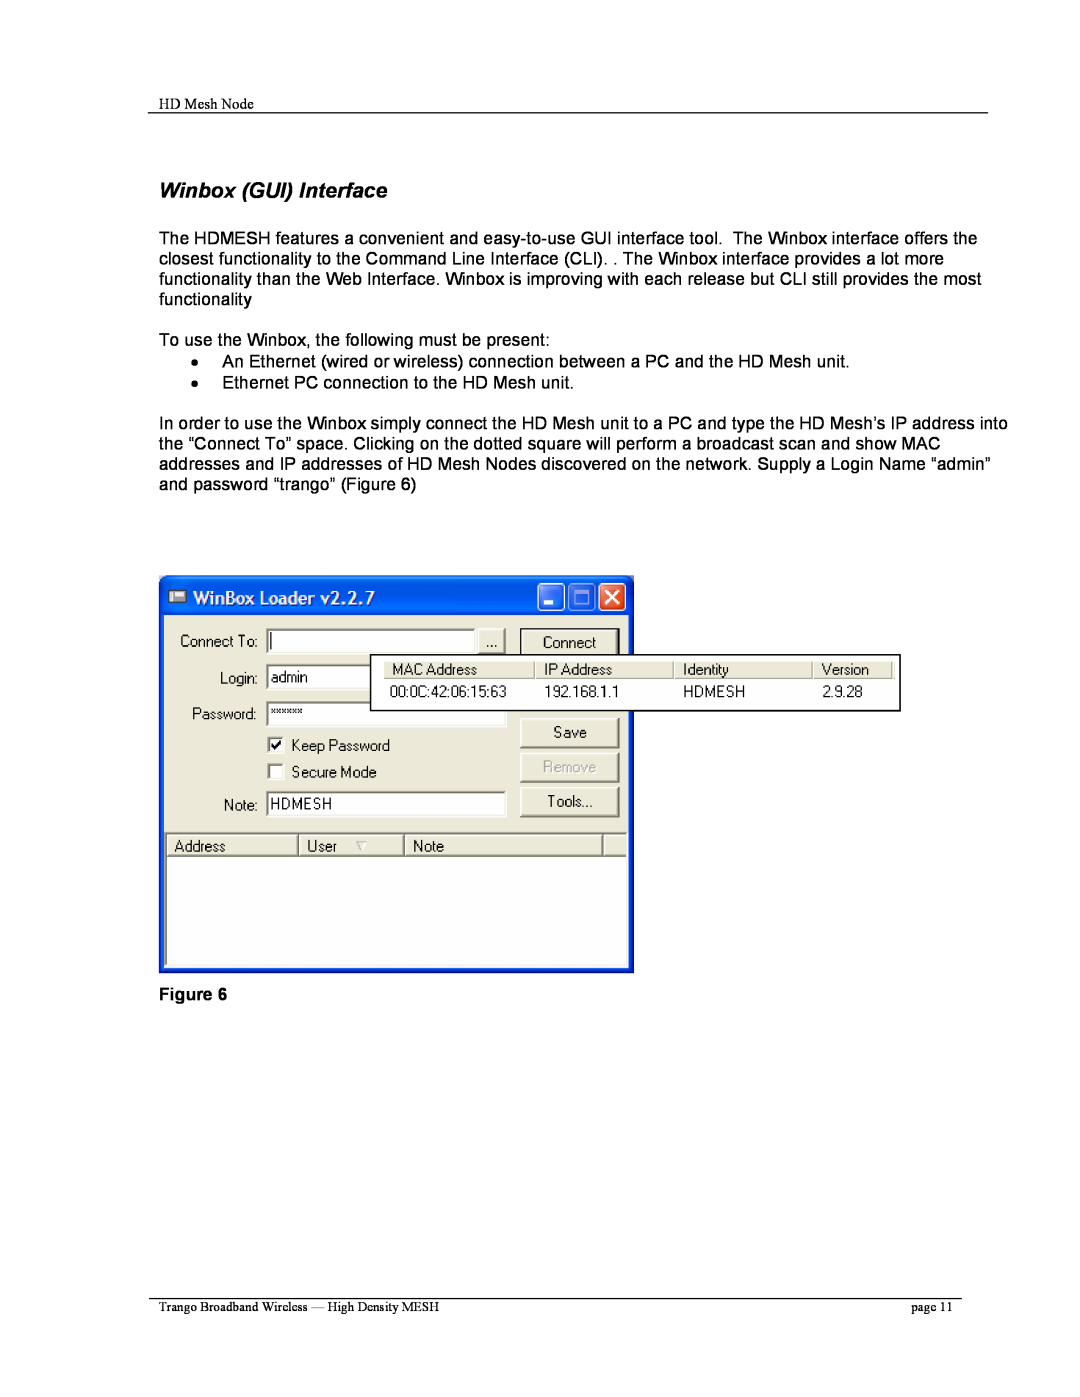 Trango Broadband High Density Mesh System user manual Winbox GUI Interface 